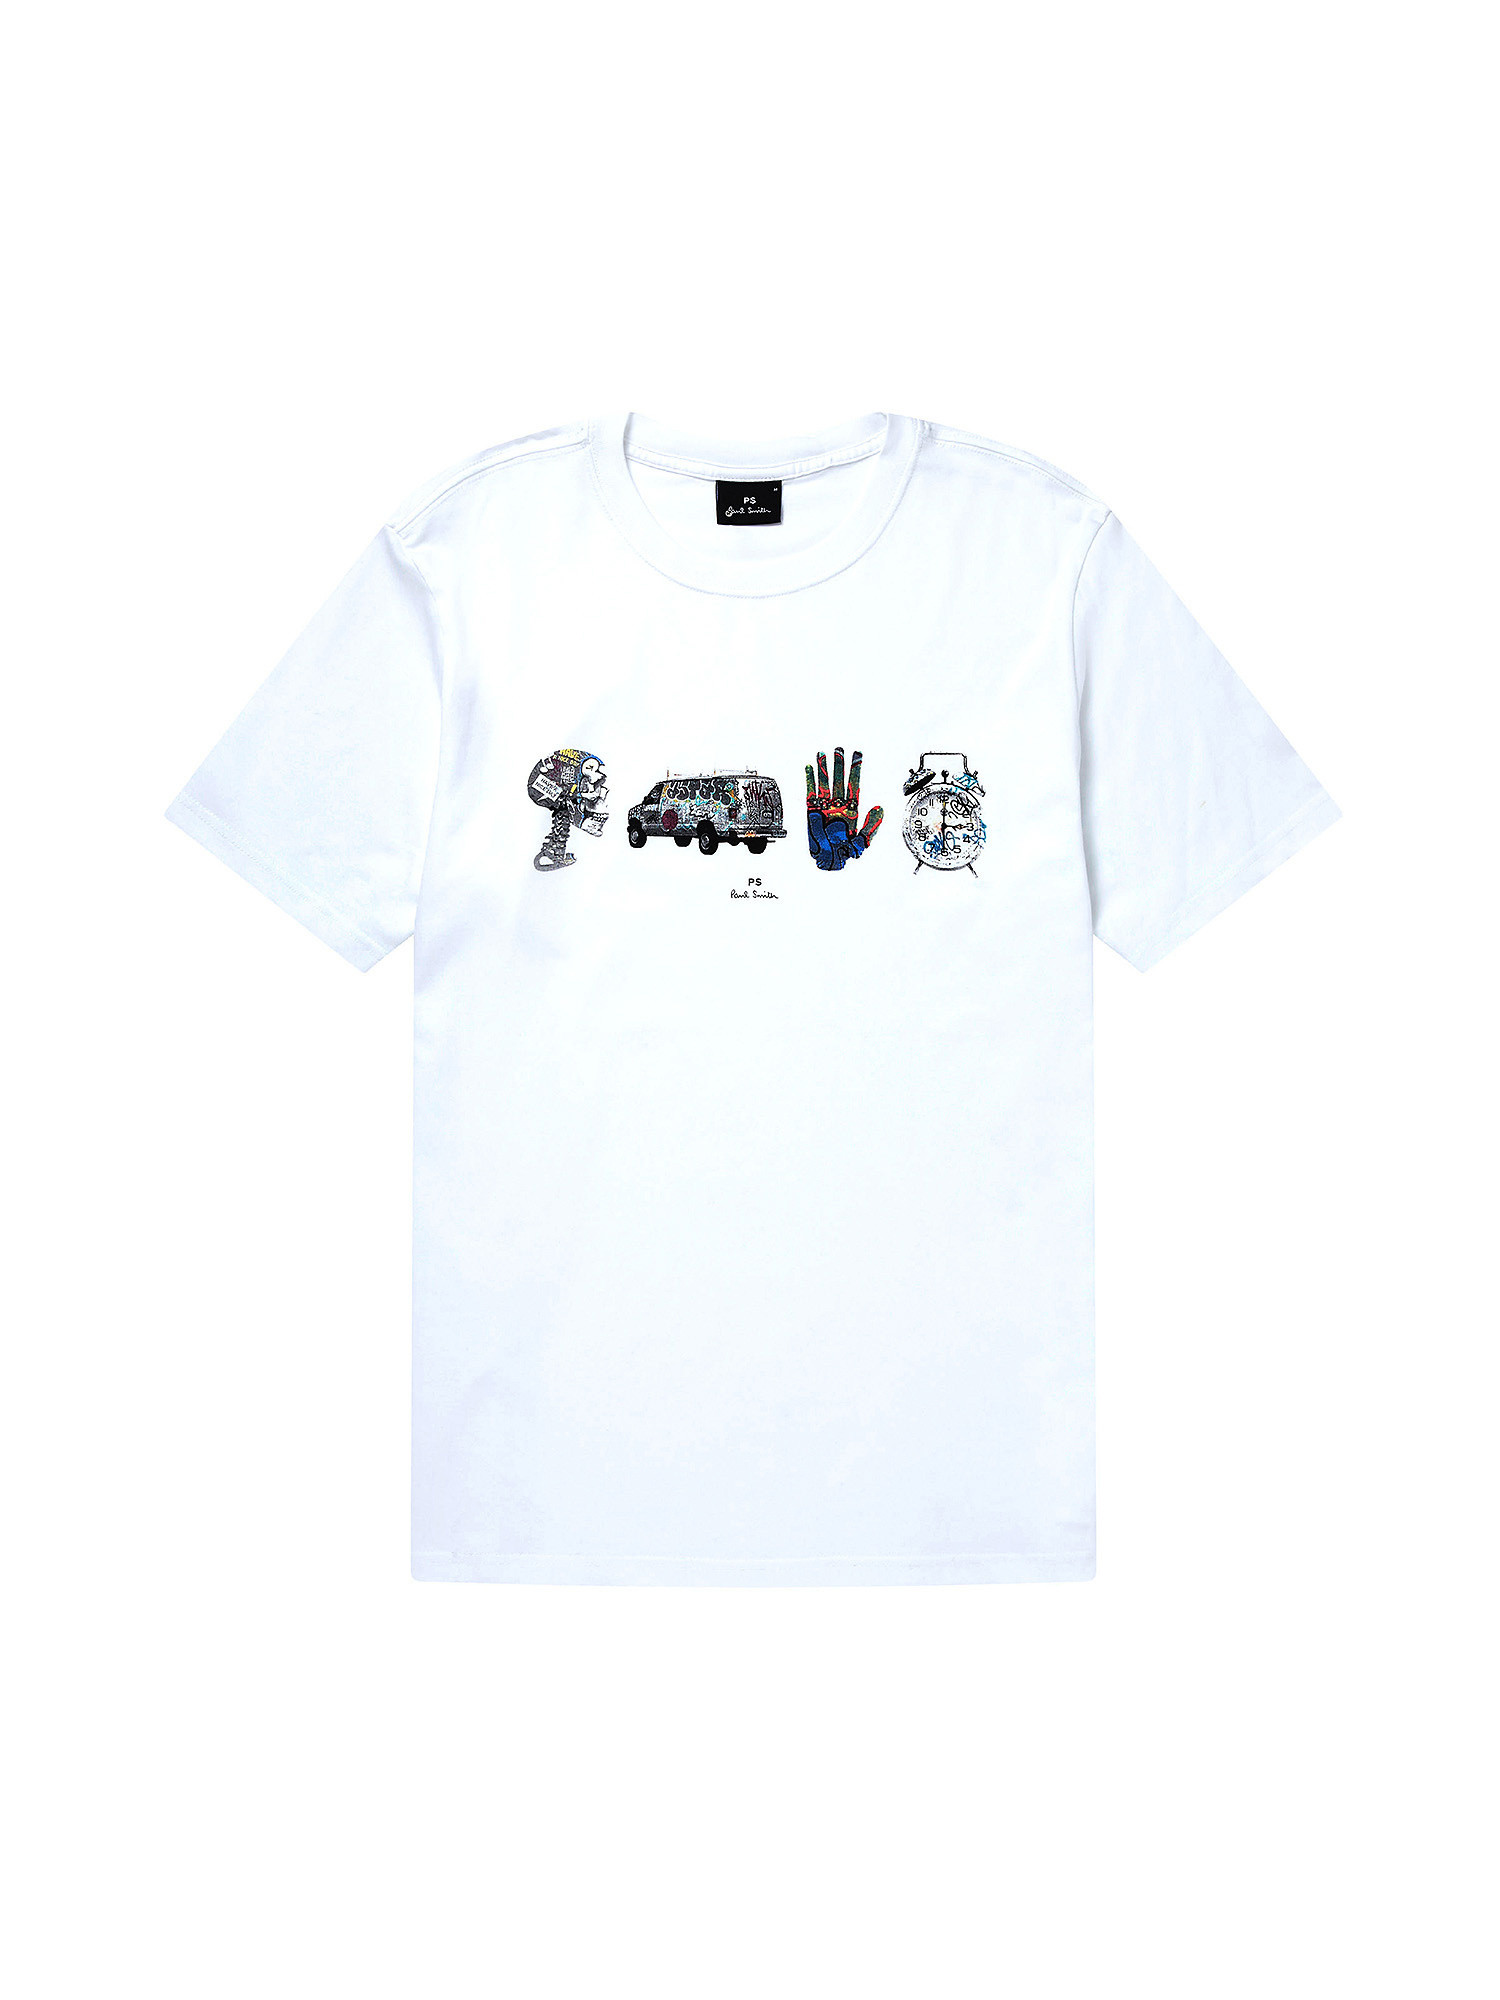 Graffiti print man short sleeve tshirt 4, White, large image number 0